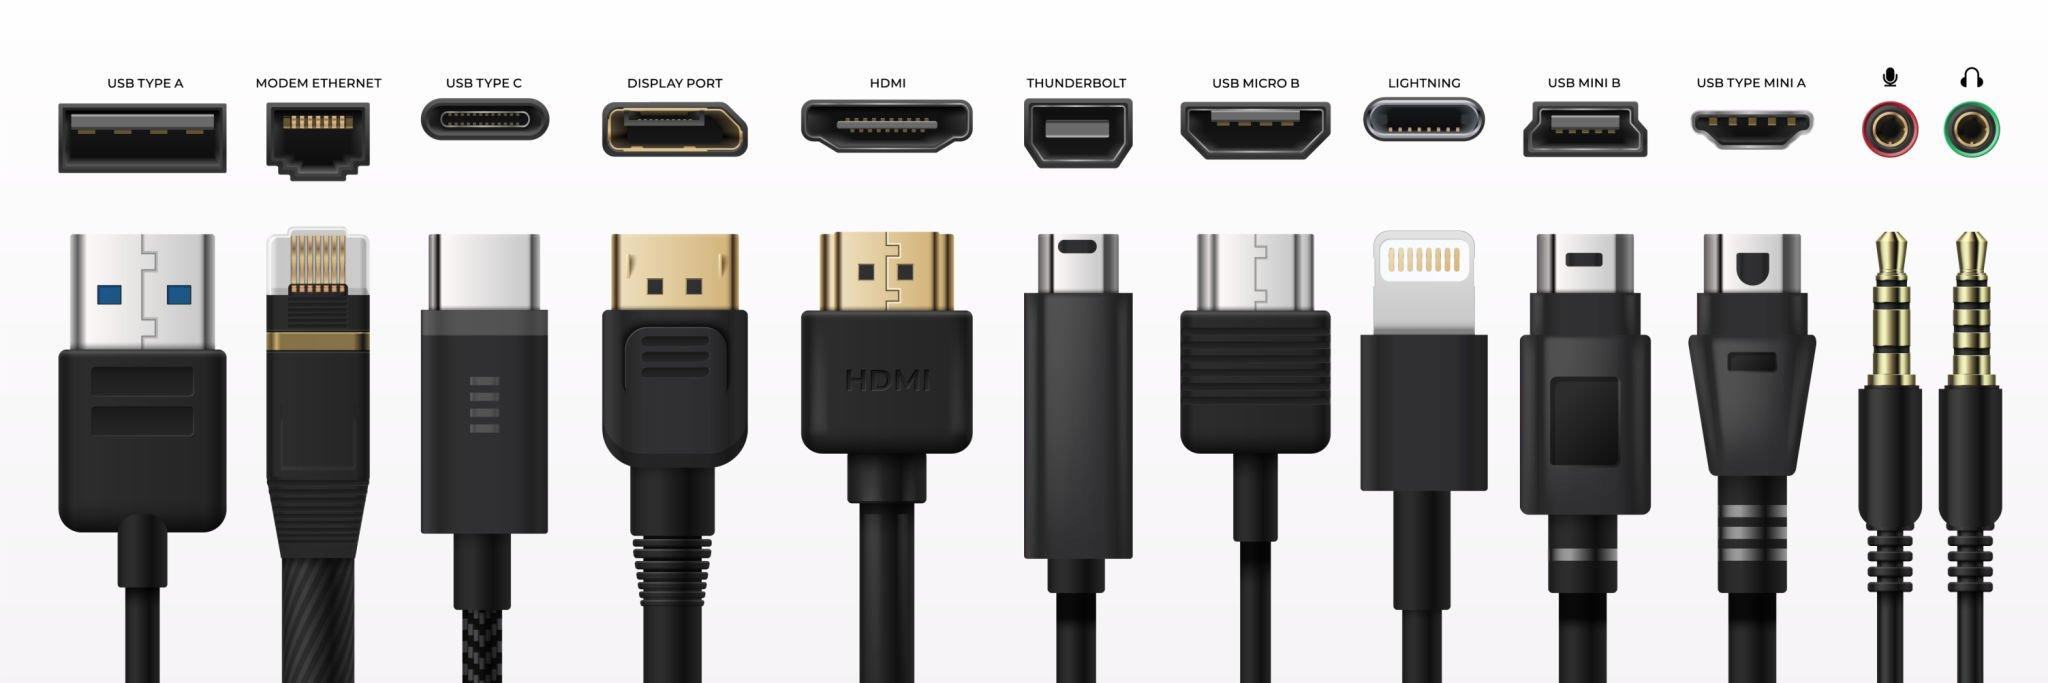 types of USB